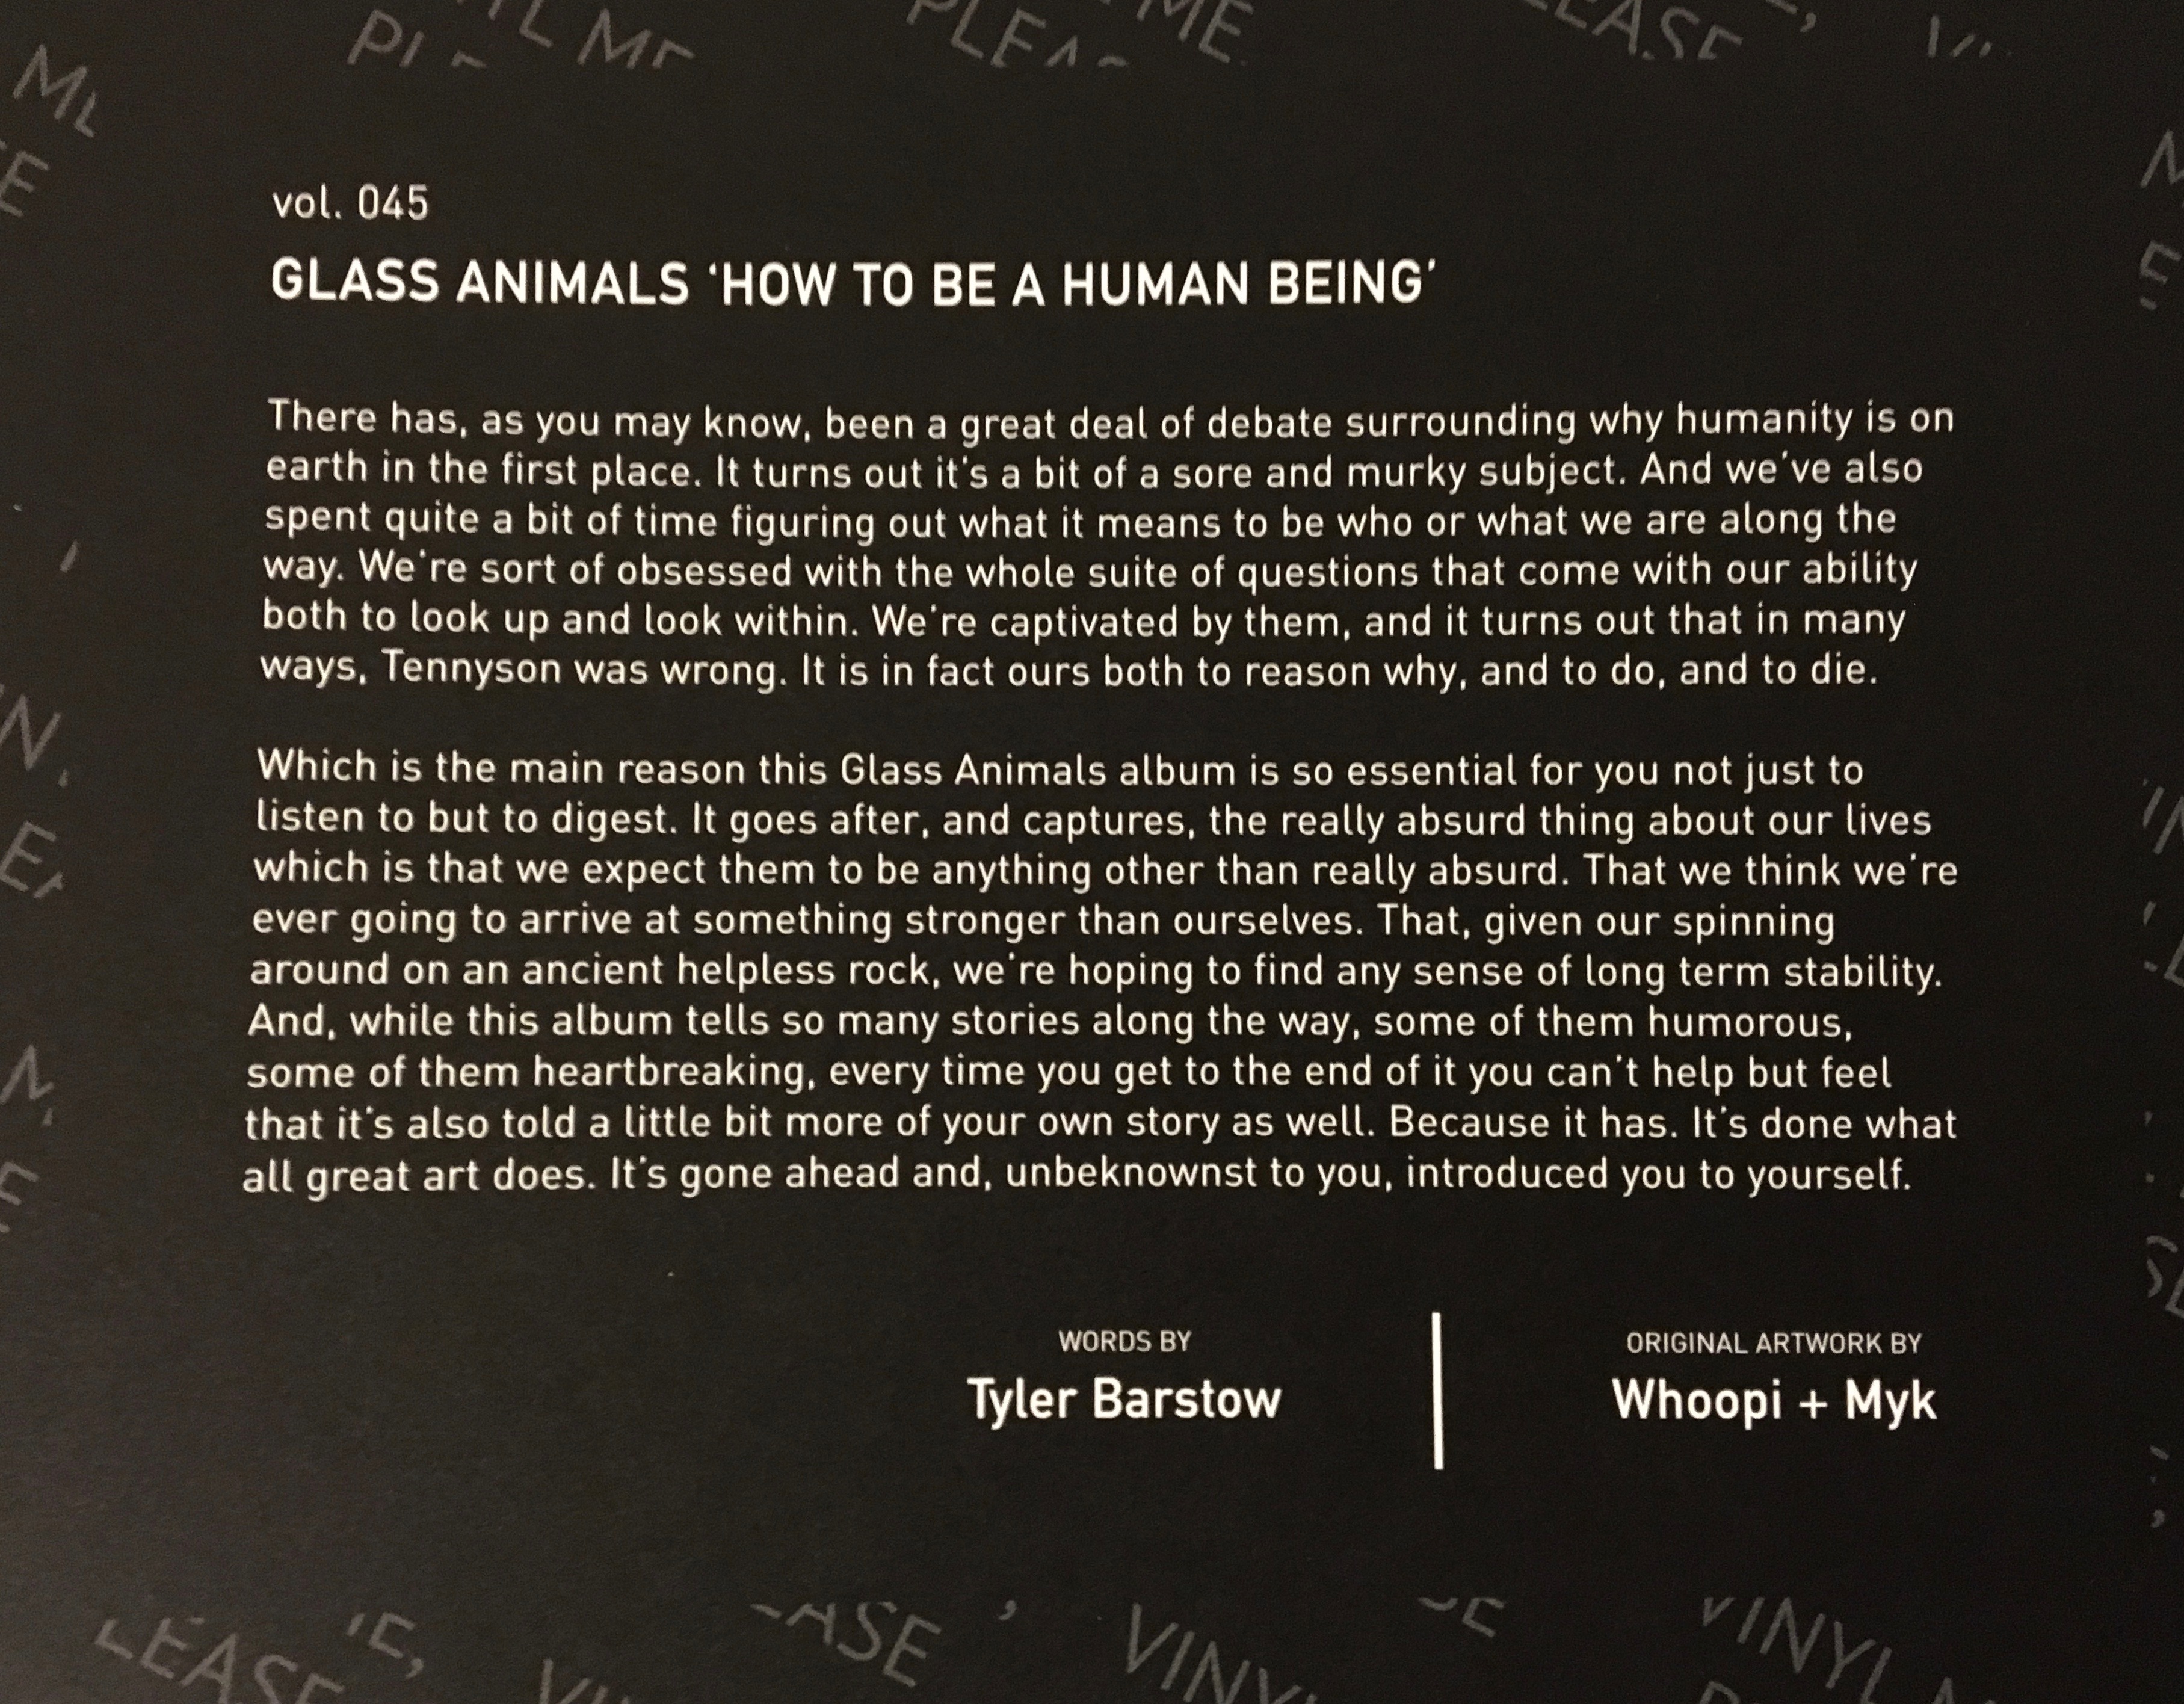 Glass animals